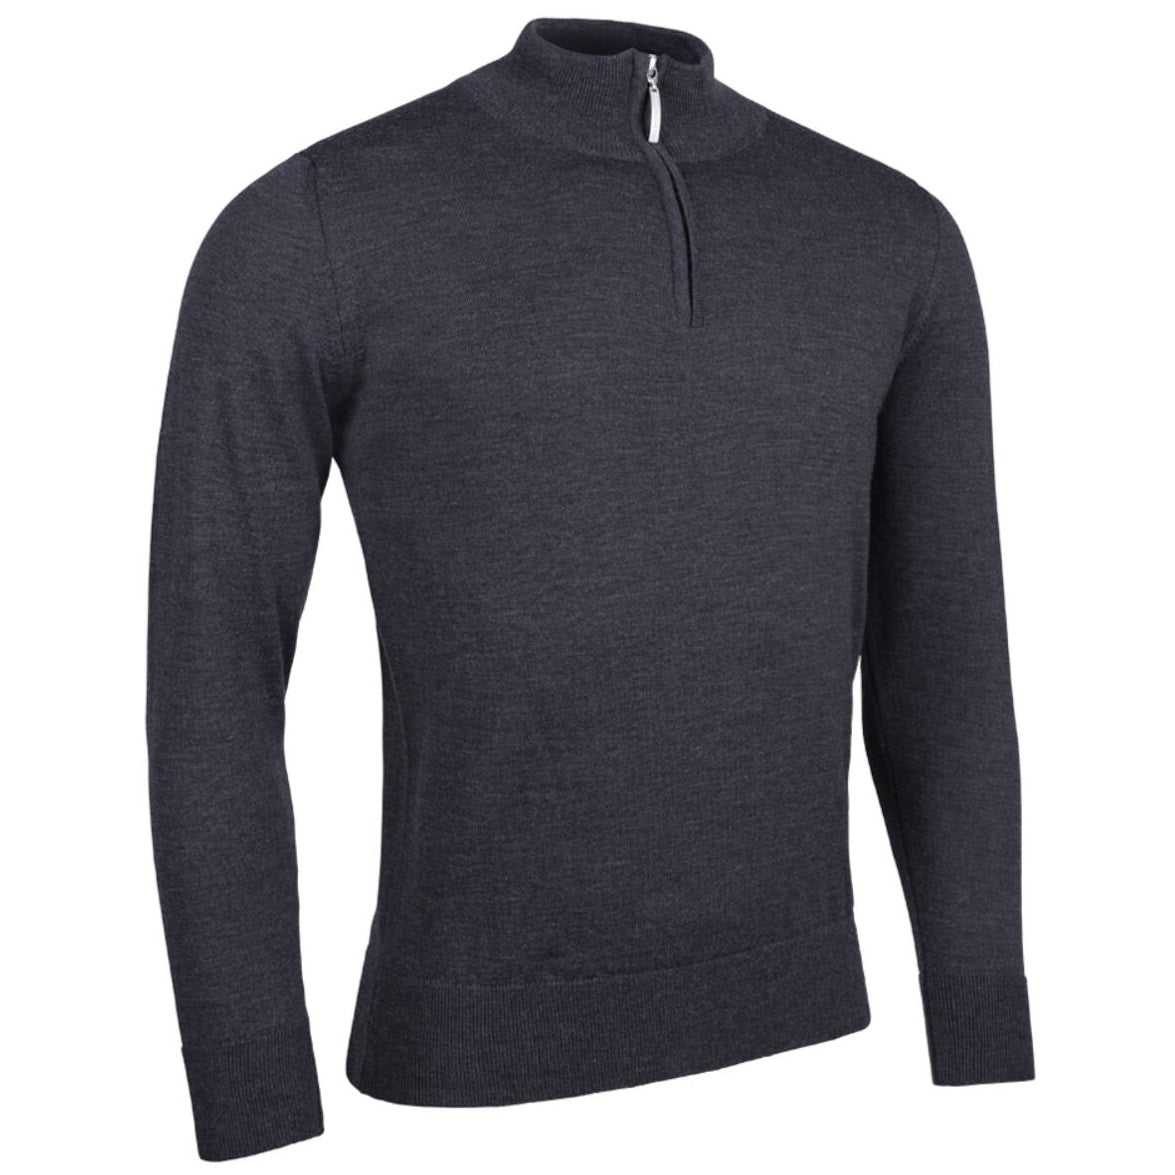 GLENMUIR Jasper Quarter Zip Merino Wool Sweater - Mens - Charcoal Marl